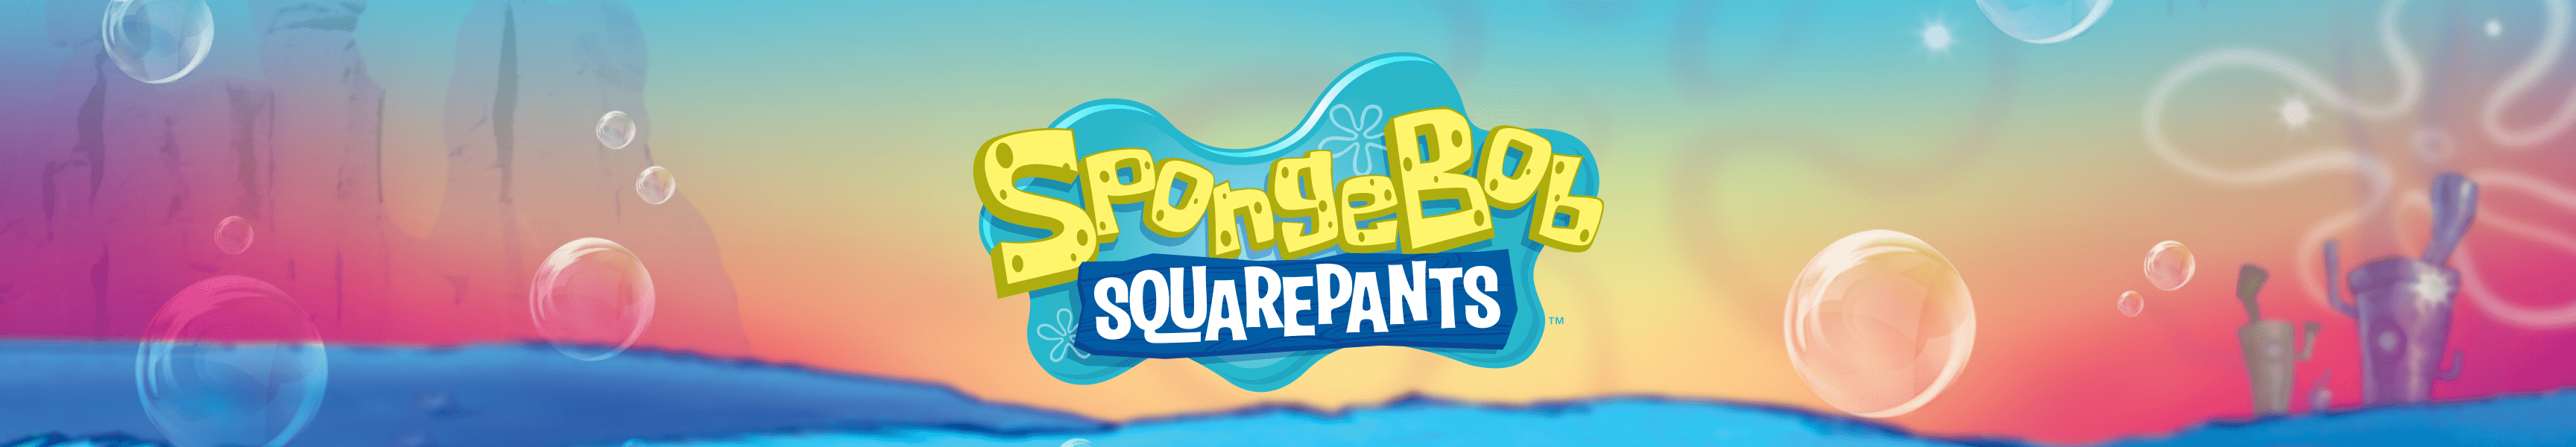 SpongeBob SquarePants x Starface